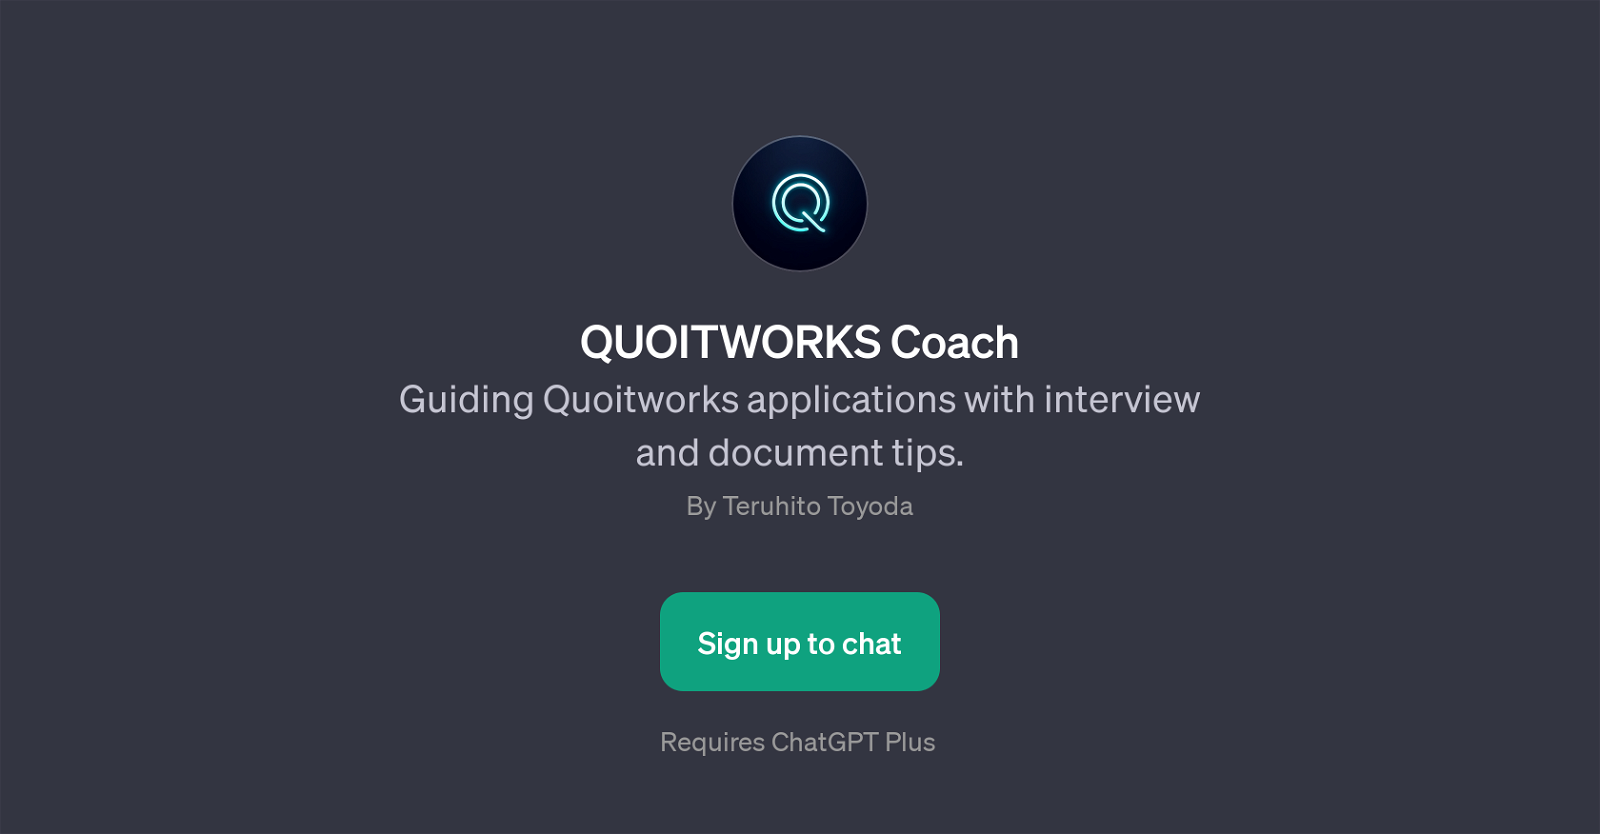 QUOITWORKS Coach website